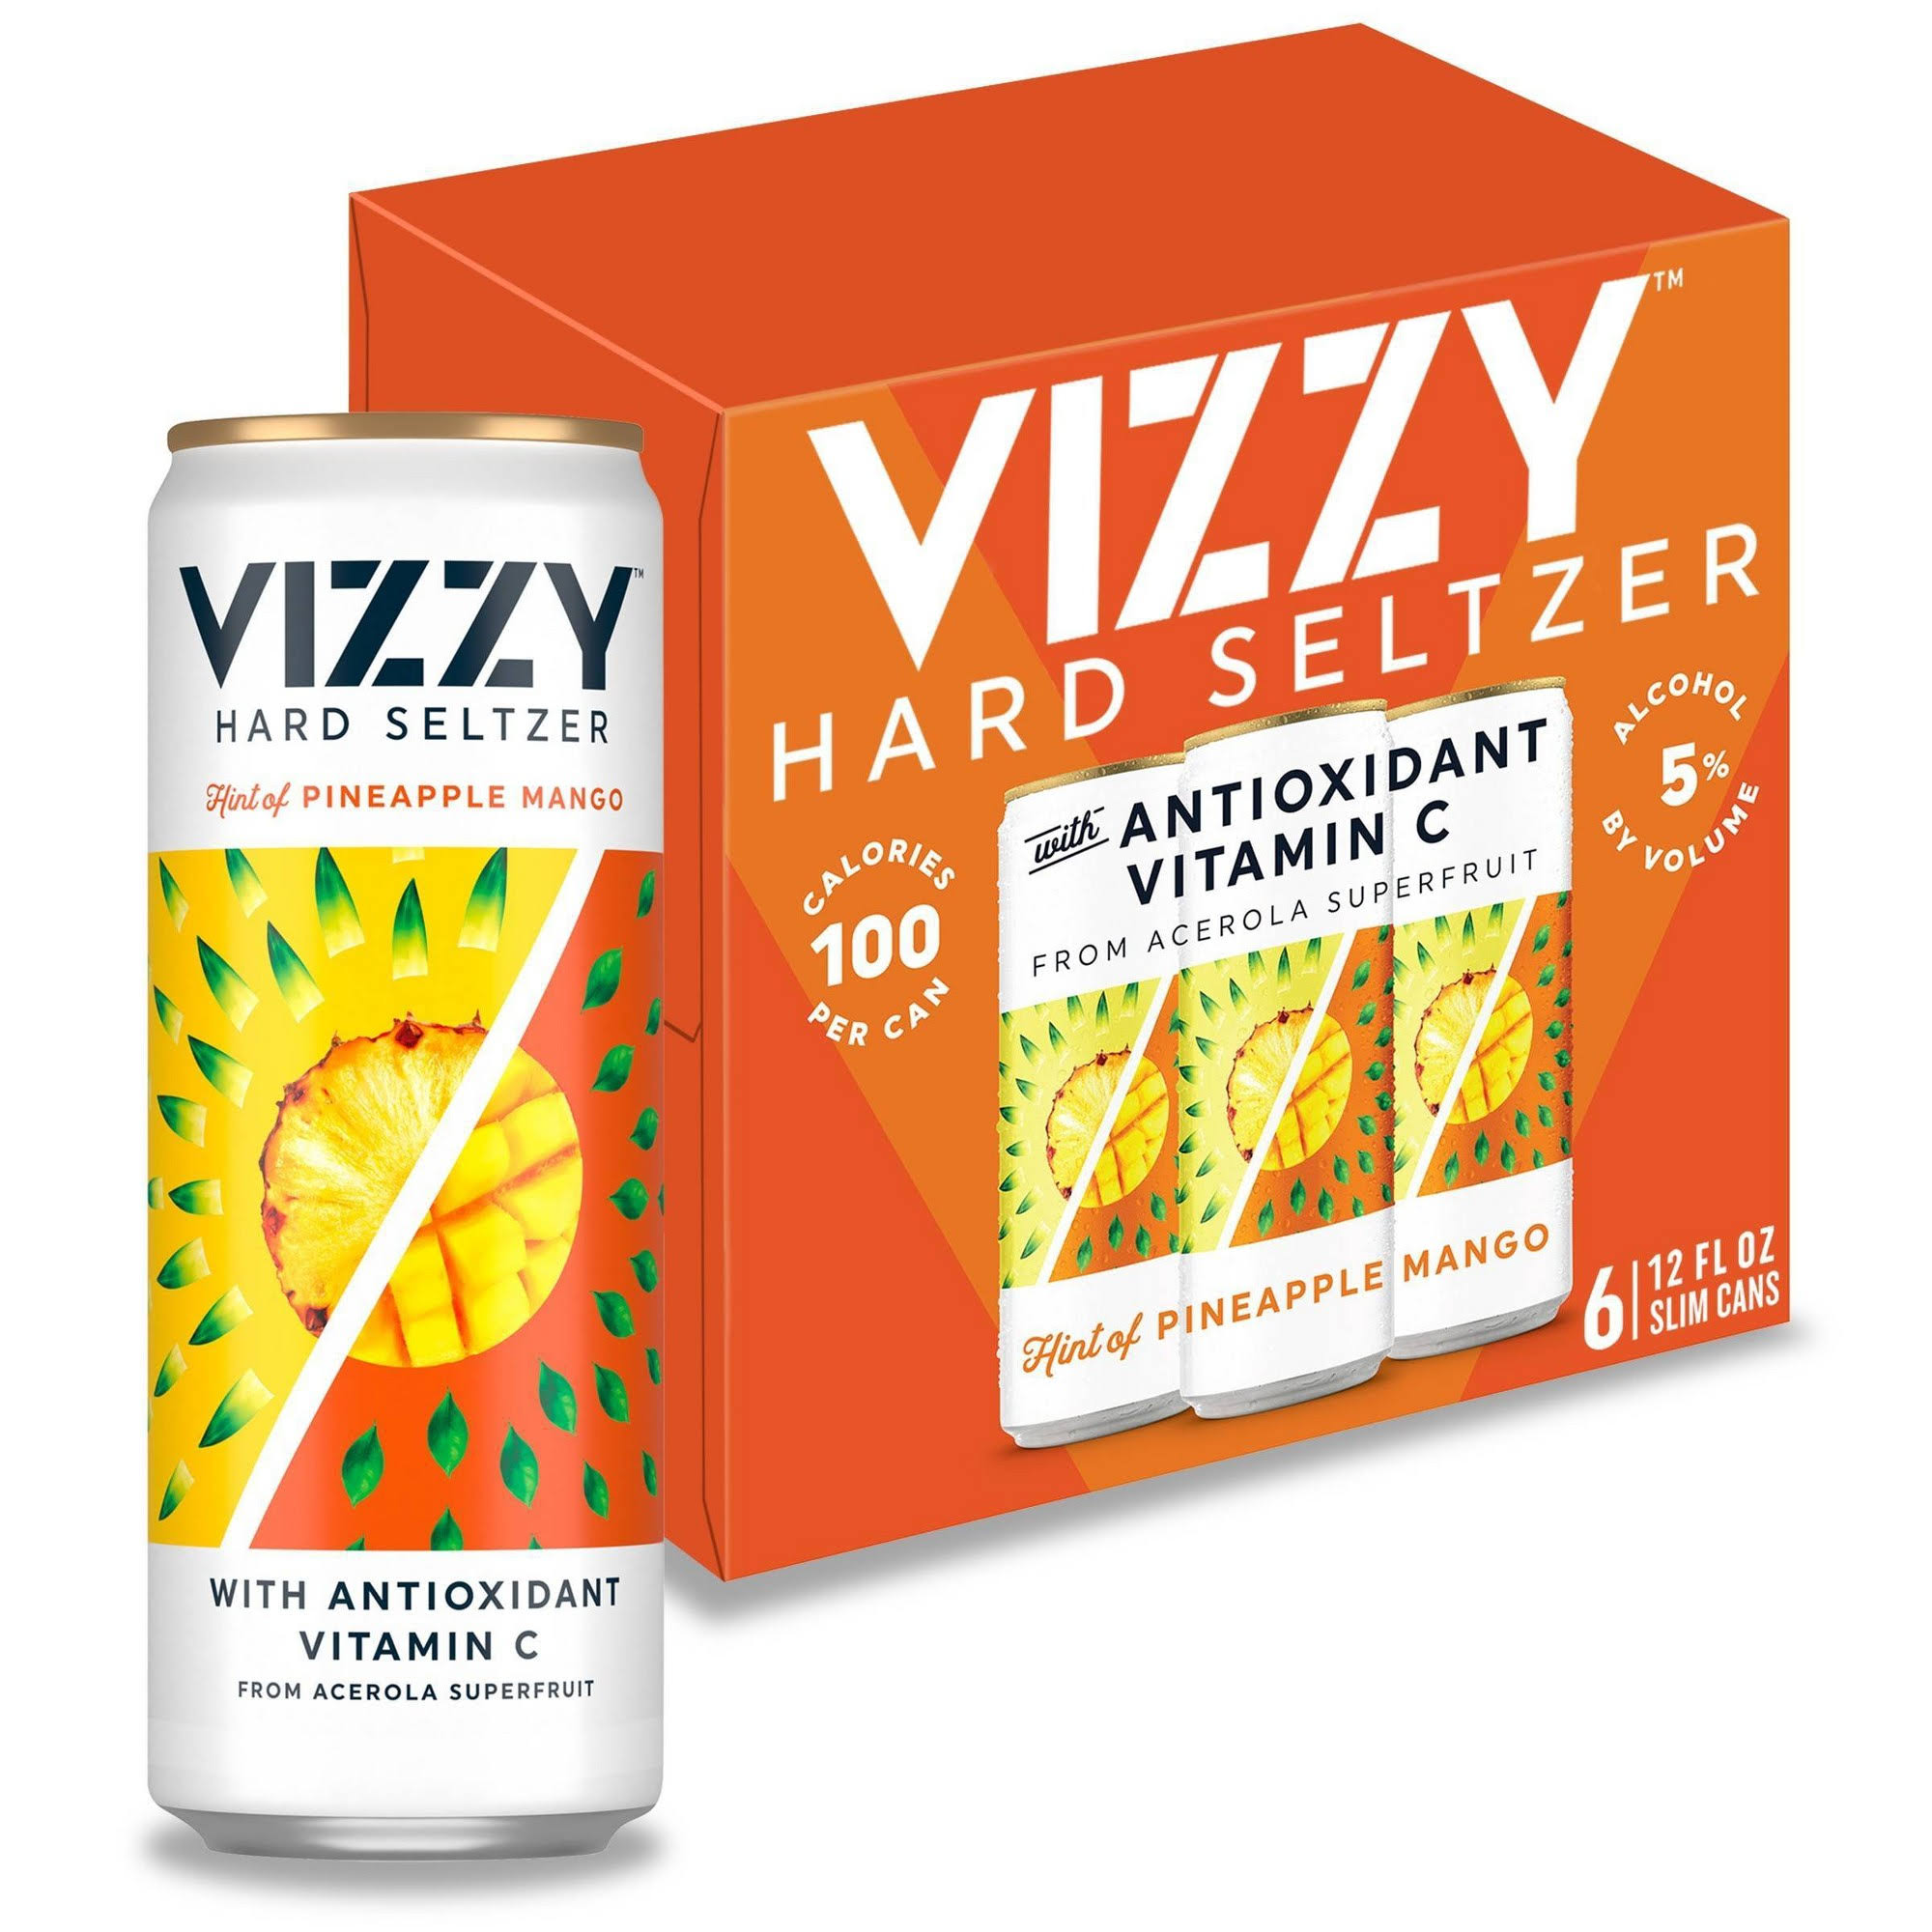 Vizzy Hard Seltzer, Pineapple Mango, 6 Pack - 6 pack, 12 fl oz cans